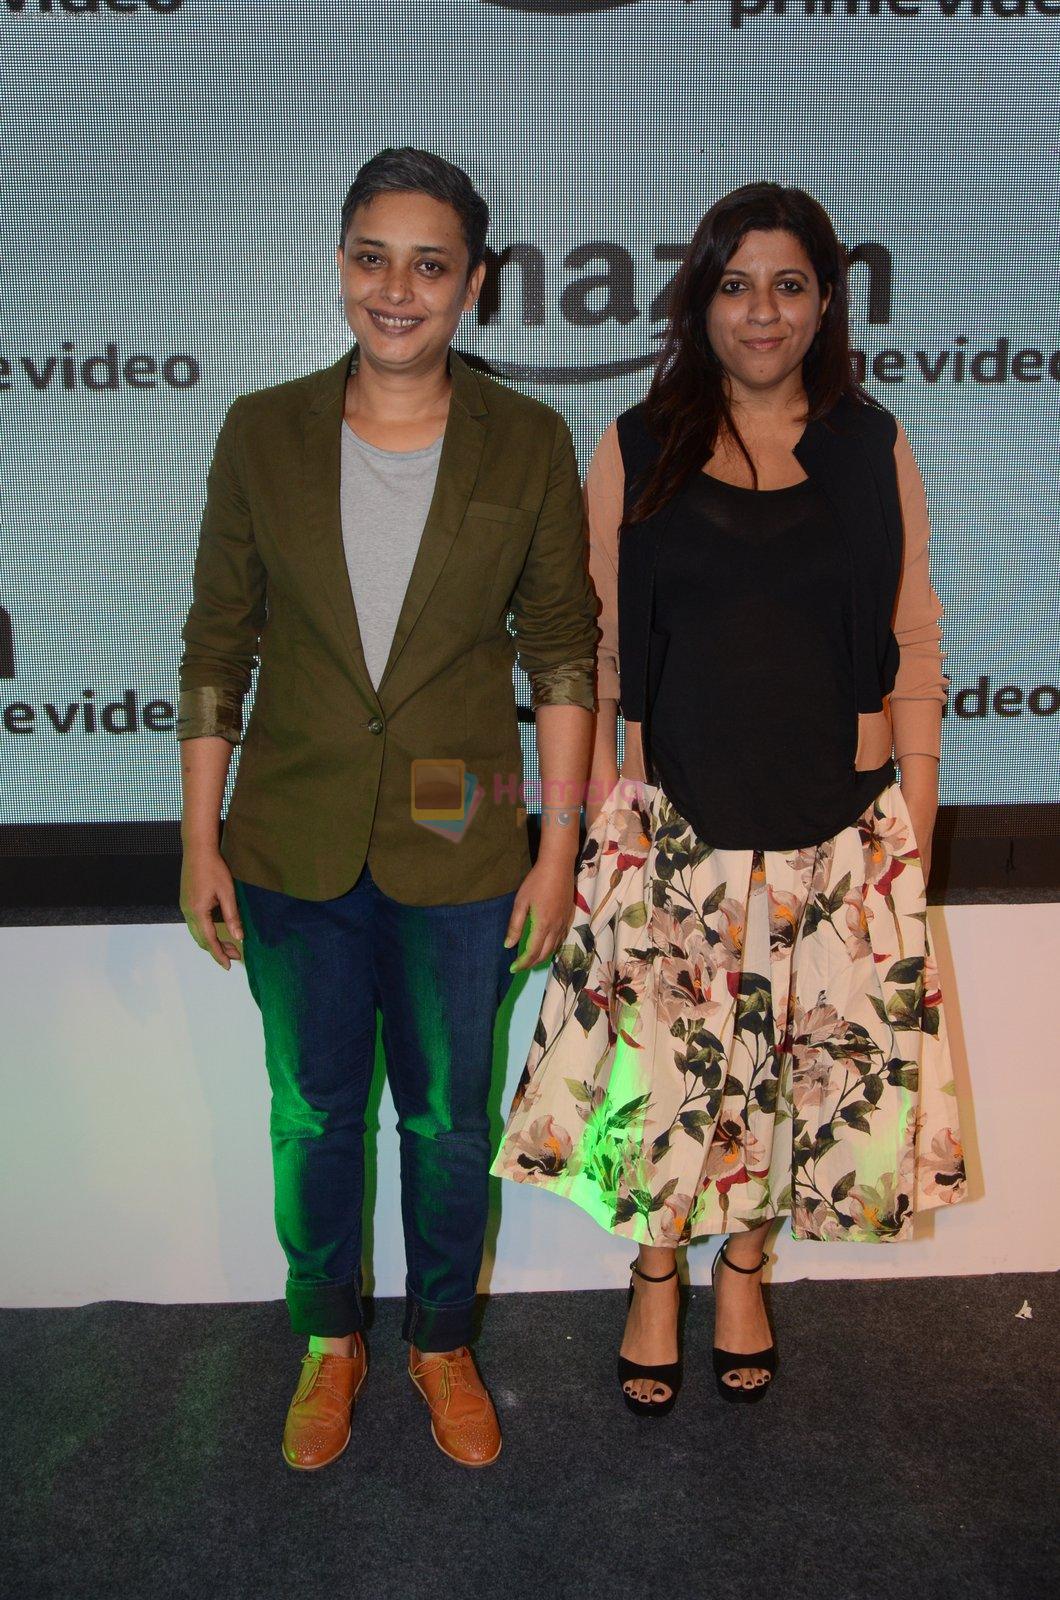 Zoya Akhtar at Amazon prime video launch on 14th Dec 2016